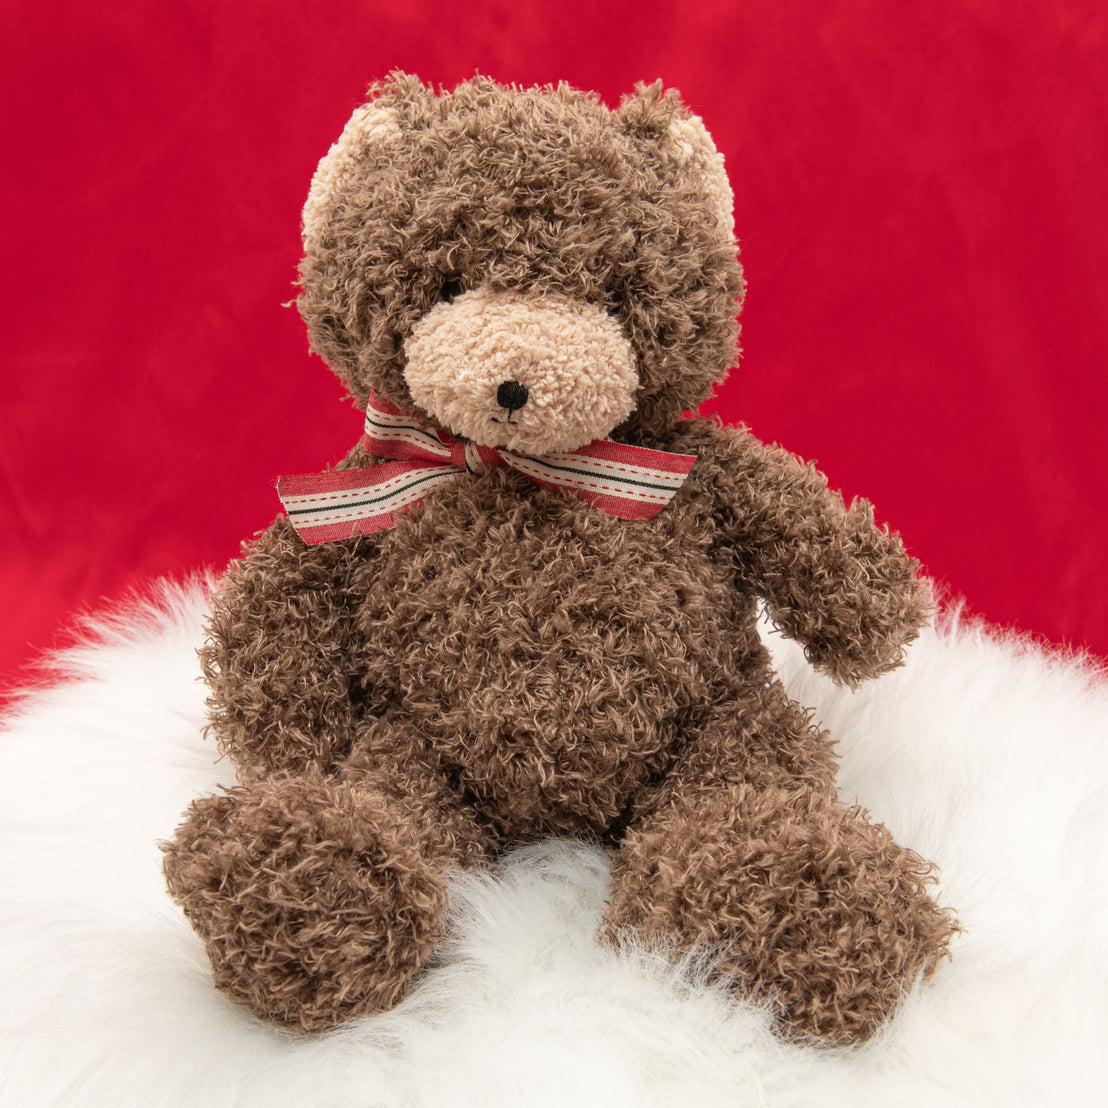 A photo of the Cubby Bear, a soft stuffed animal bear, sitting on a white fur rug.